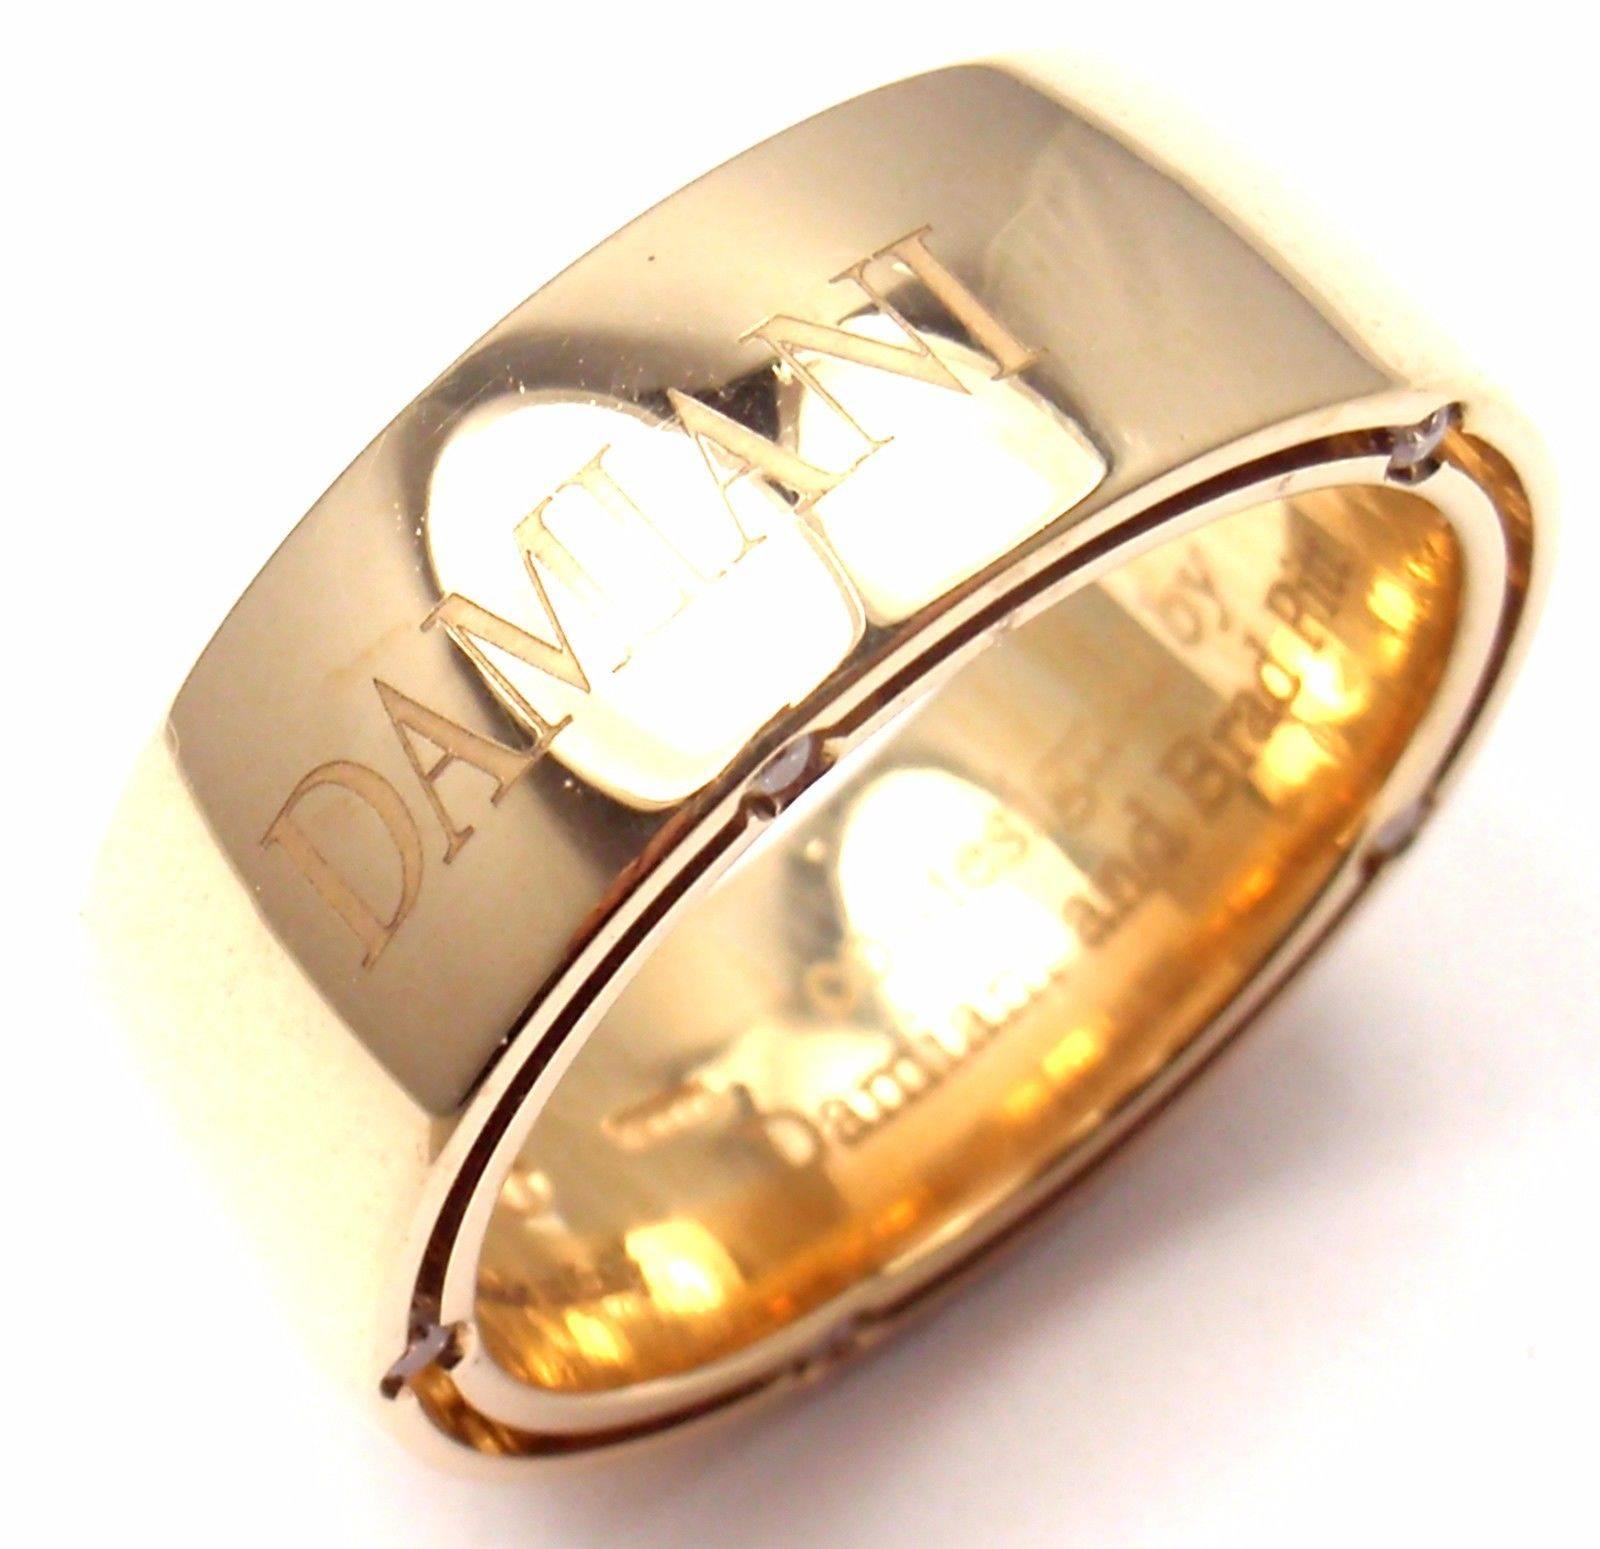 brad pitt ring design